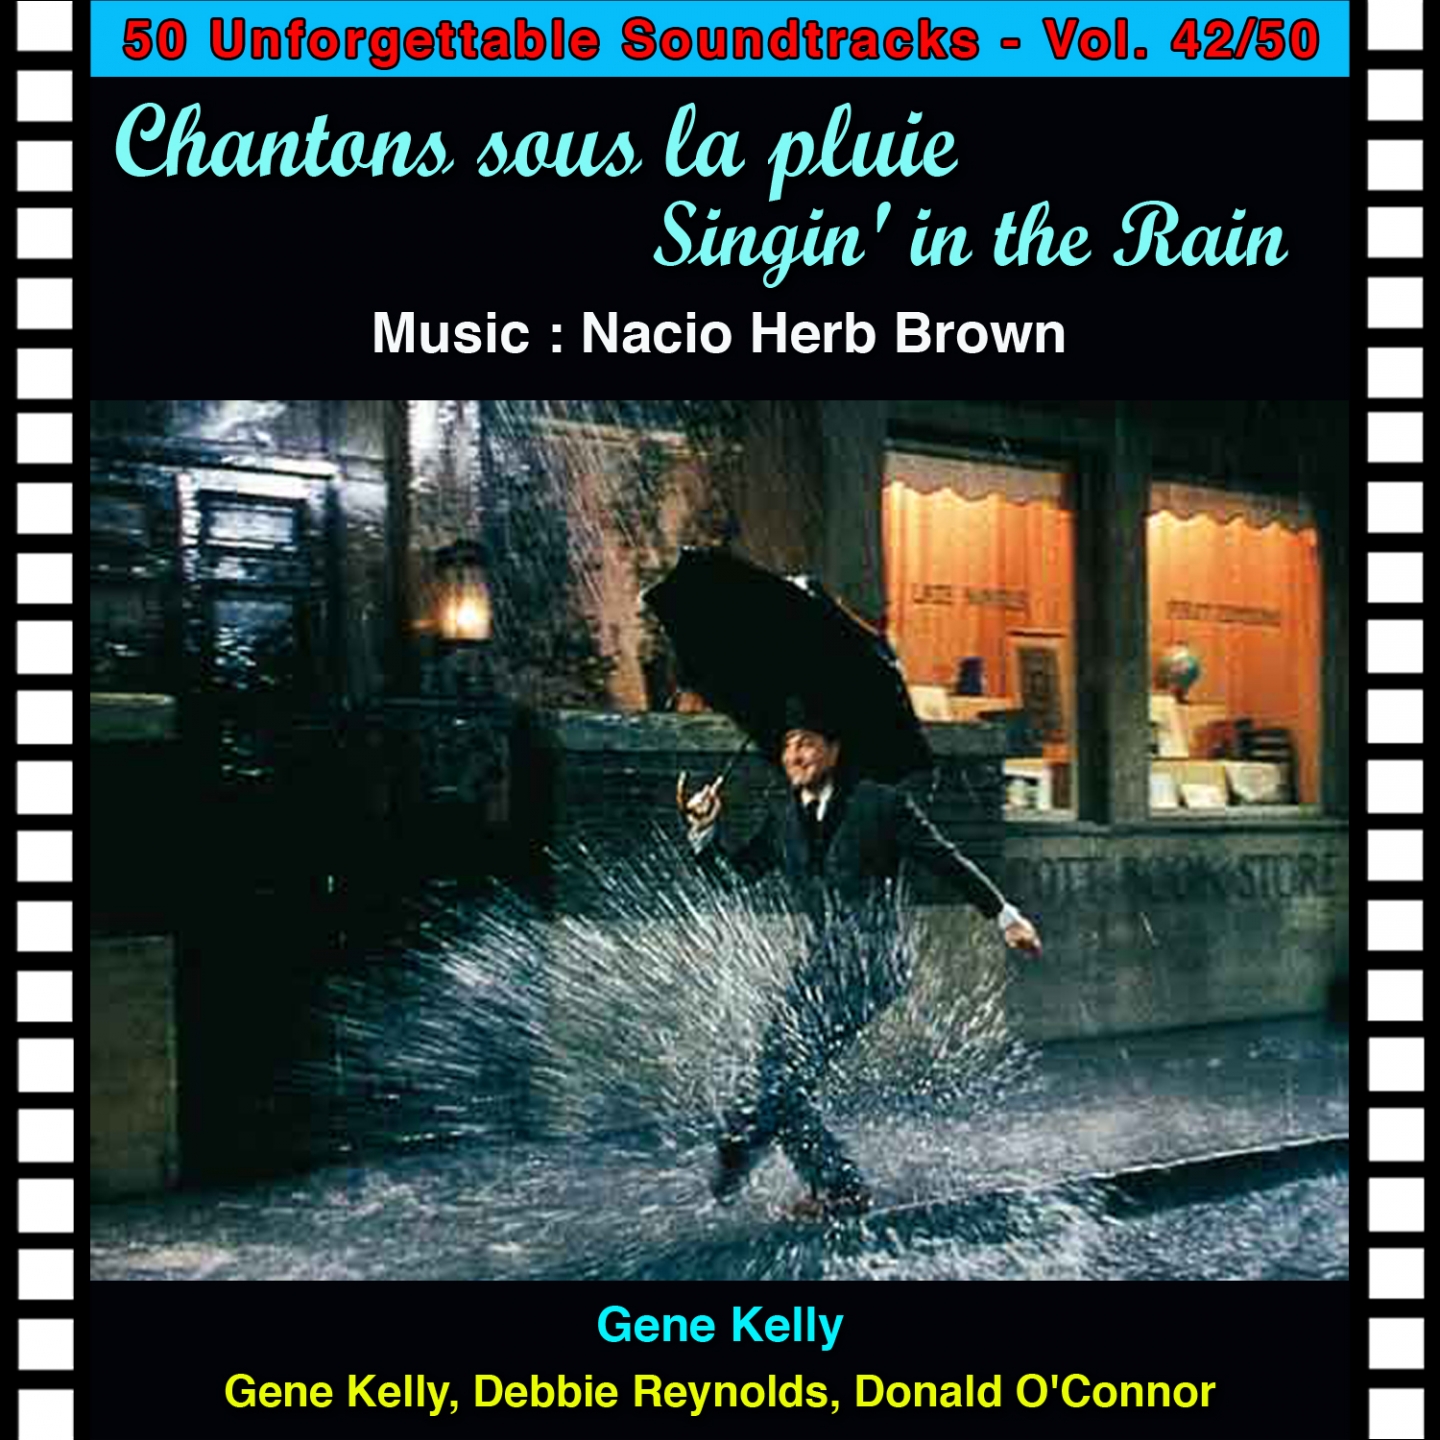 Singing' in the Rain (Chantons Sous La Pluie - Singing' in the Rai)